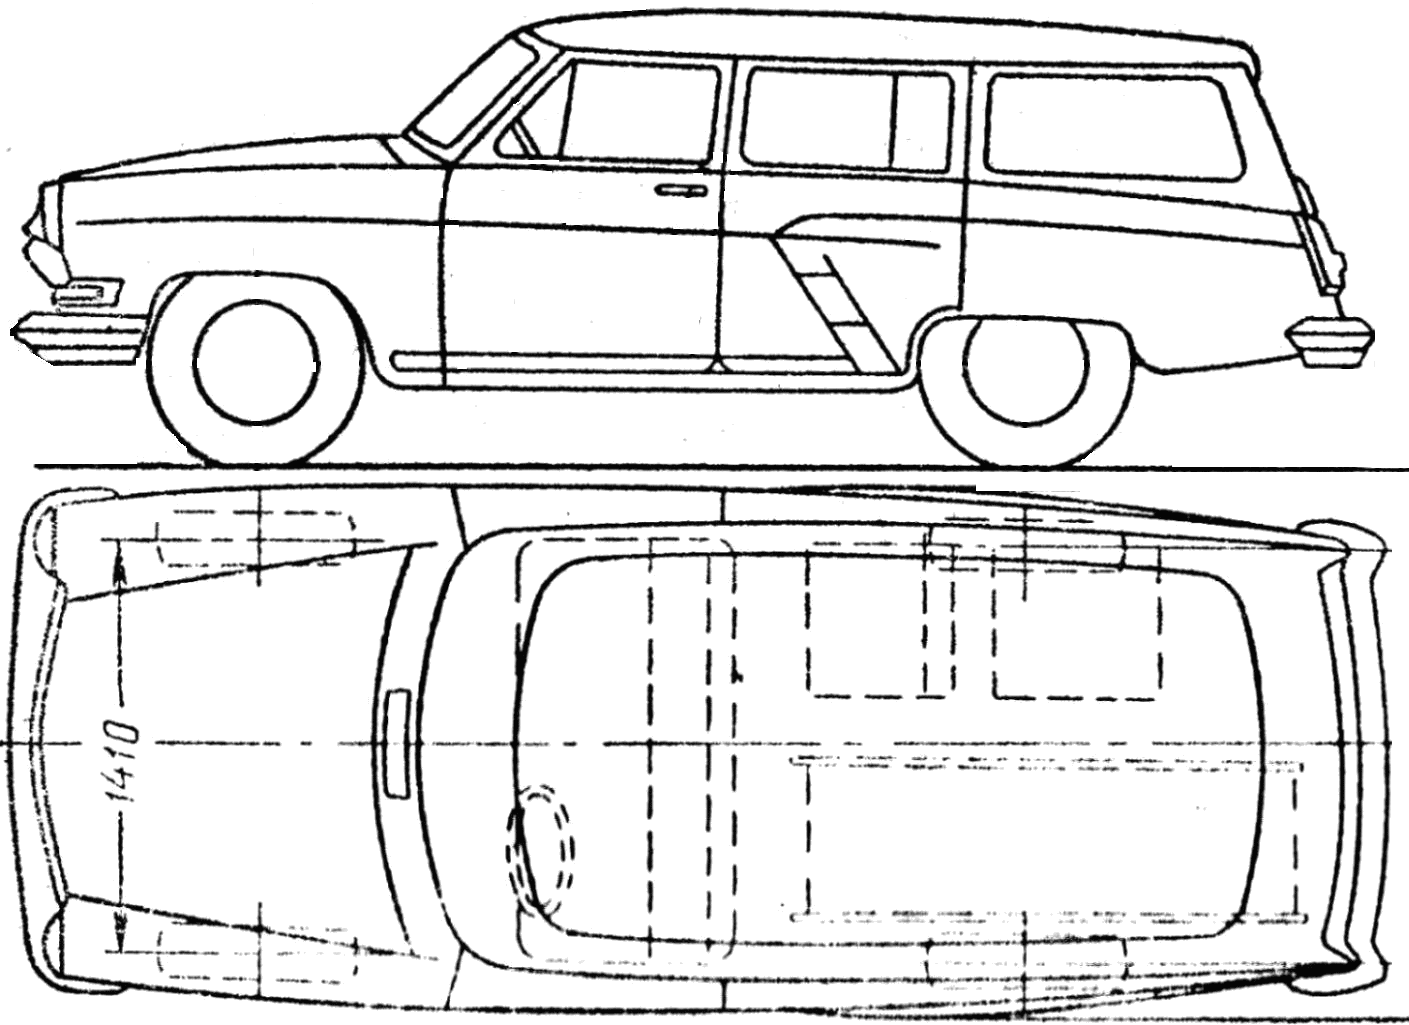 1948 Chevrolet Fleetline - One